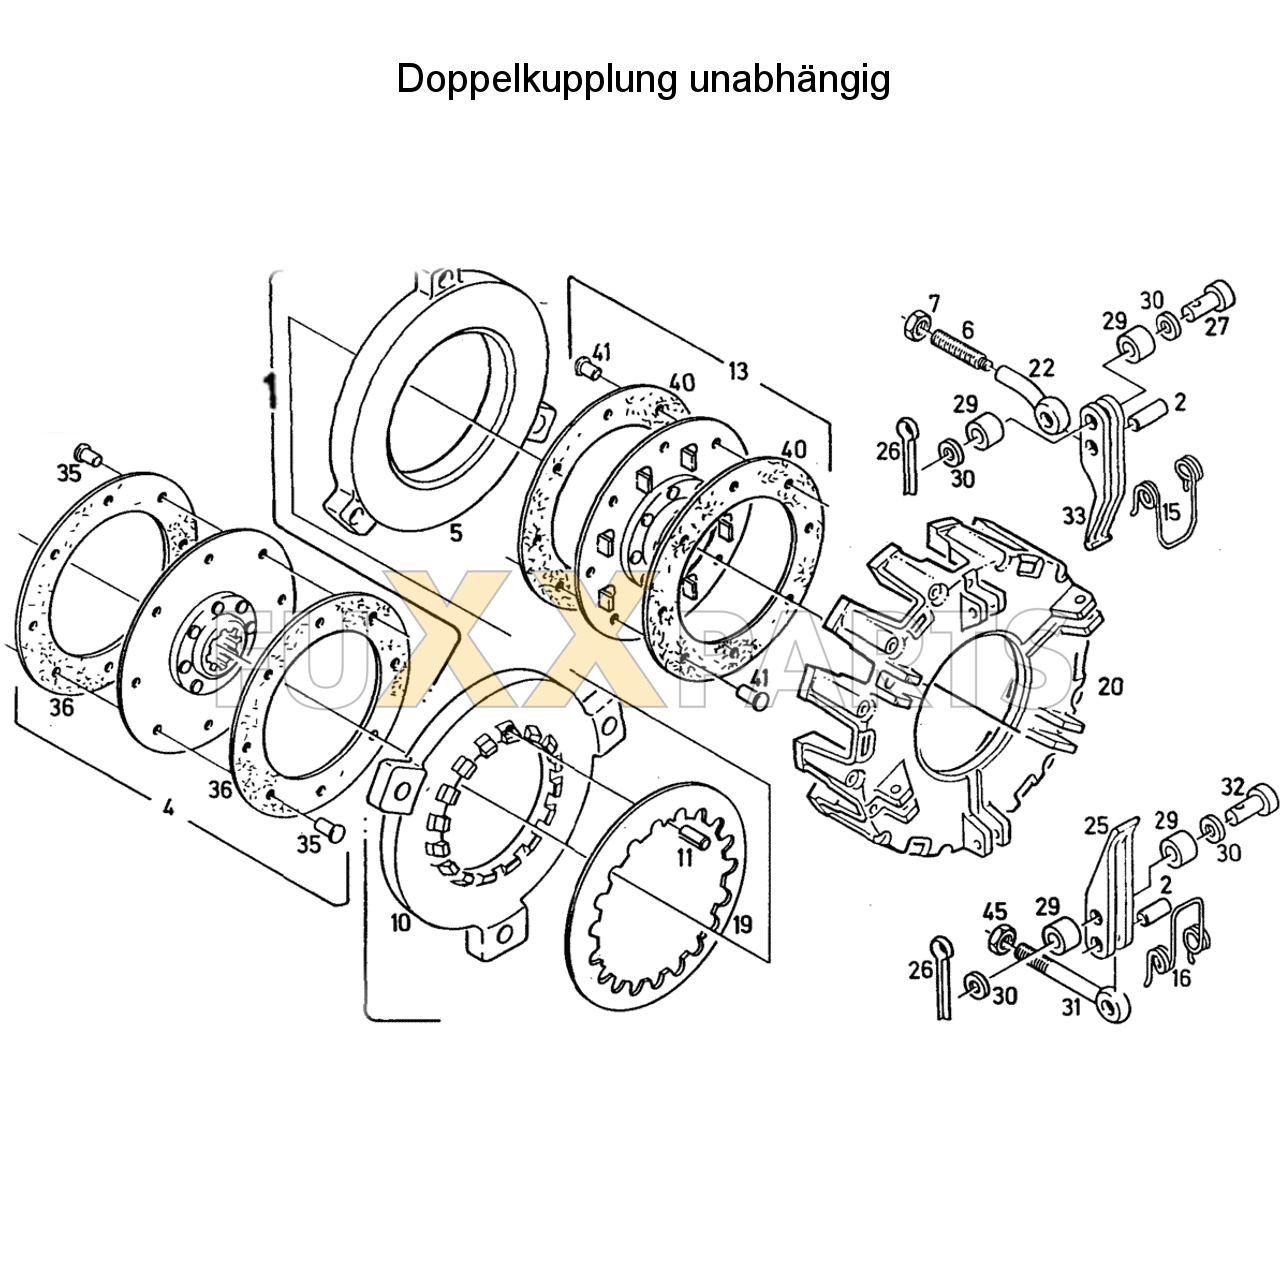 D 6507 C Doppelkupplung unabhängig